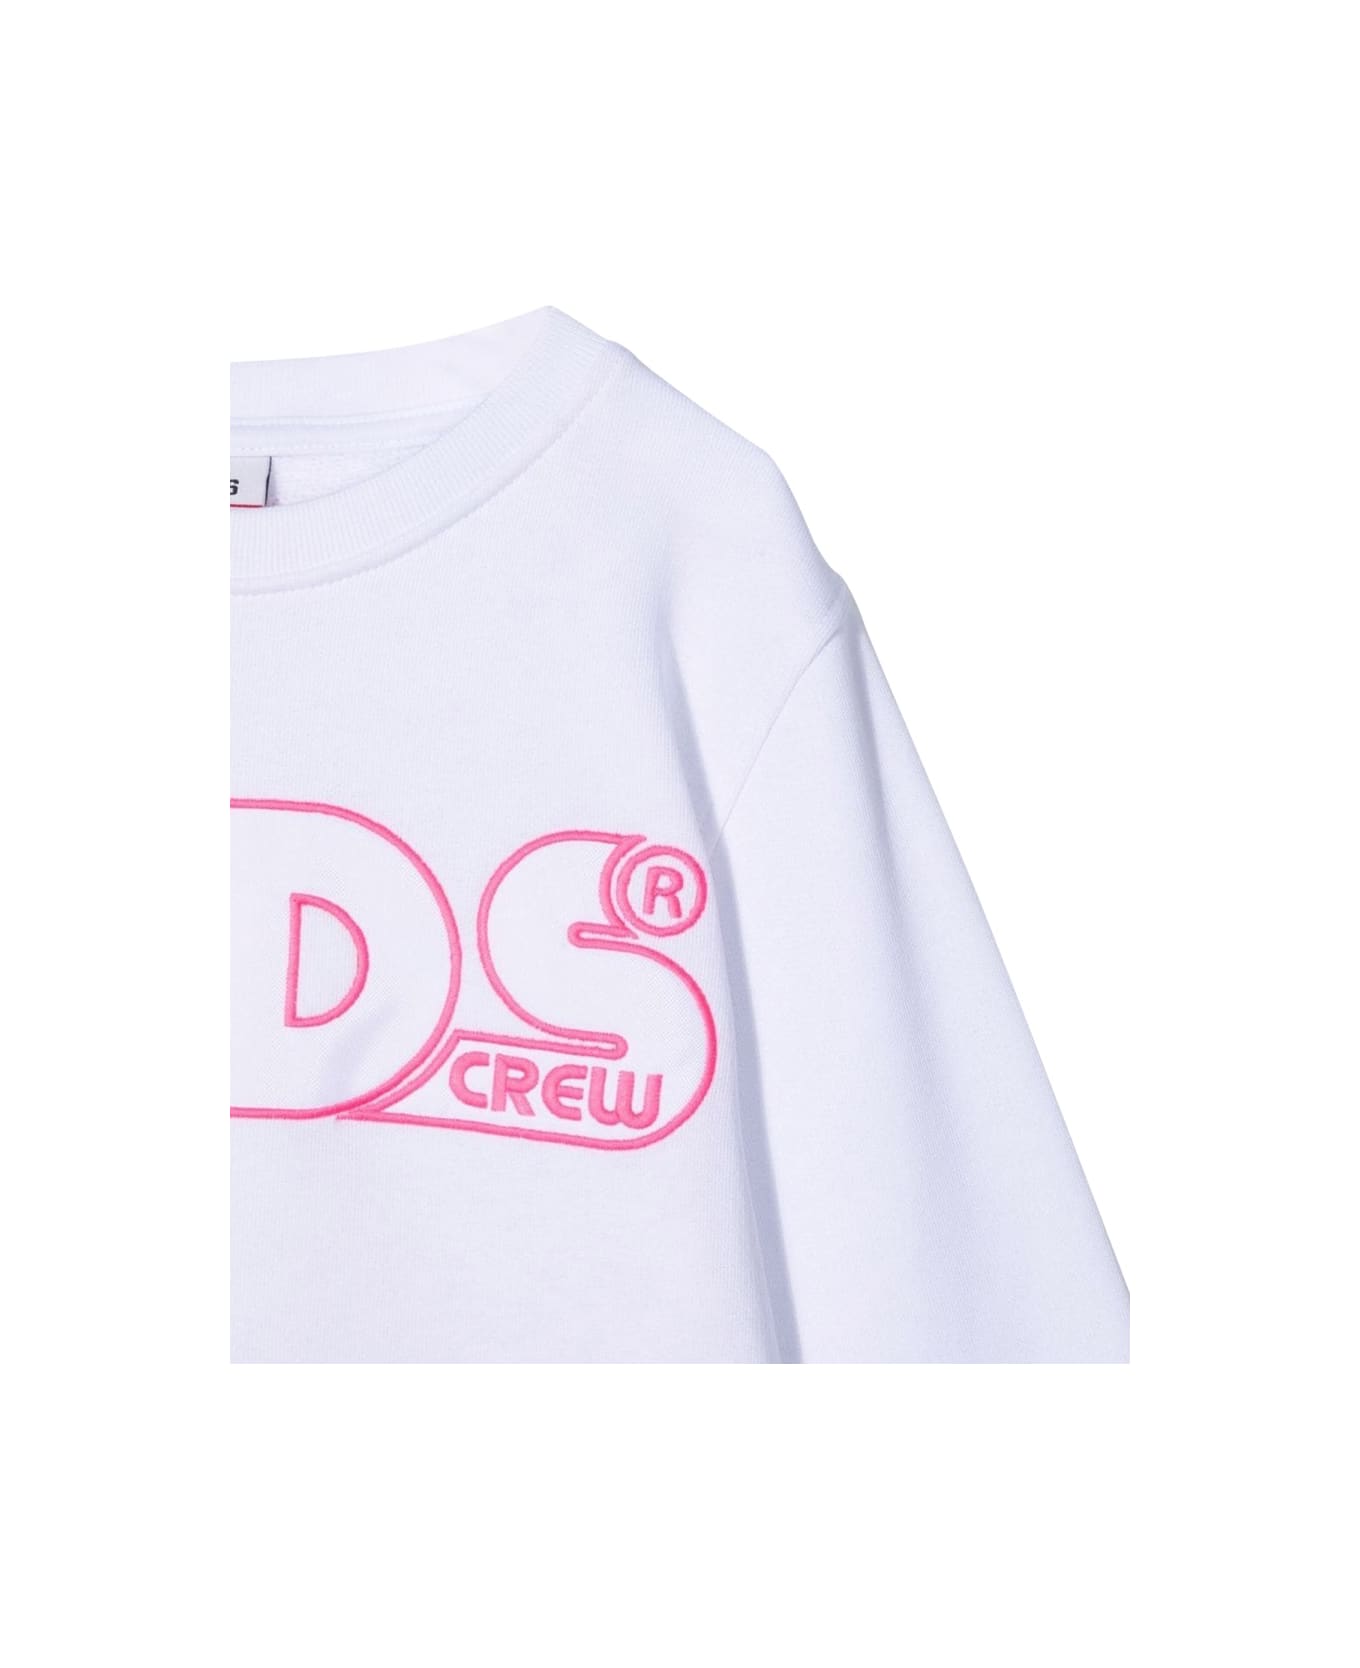 GCDS Sweatshirt Cropped Girl - WHITE